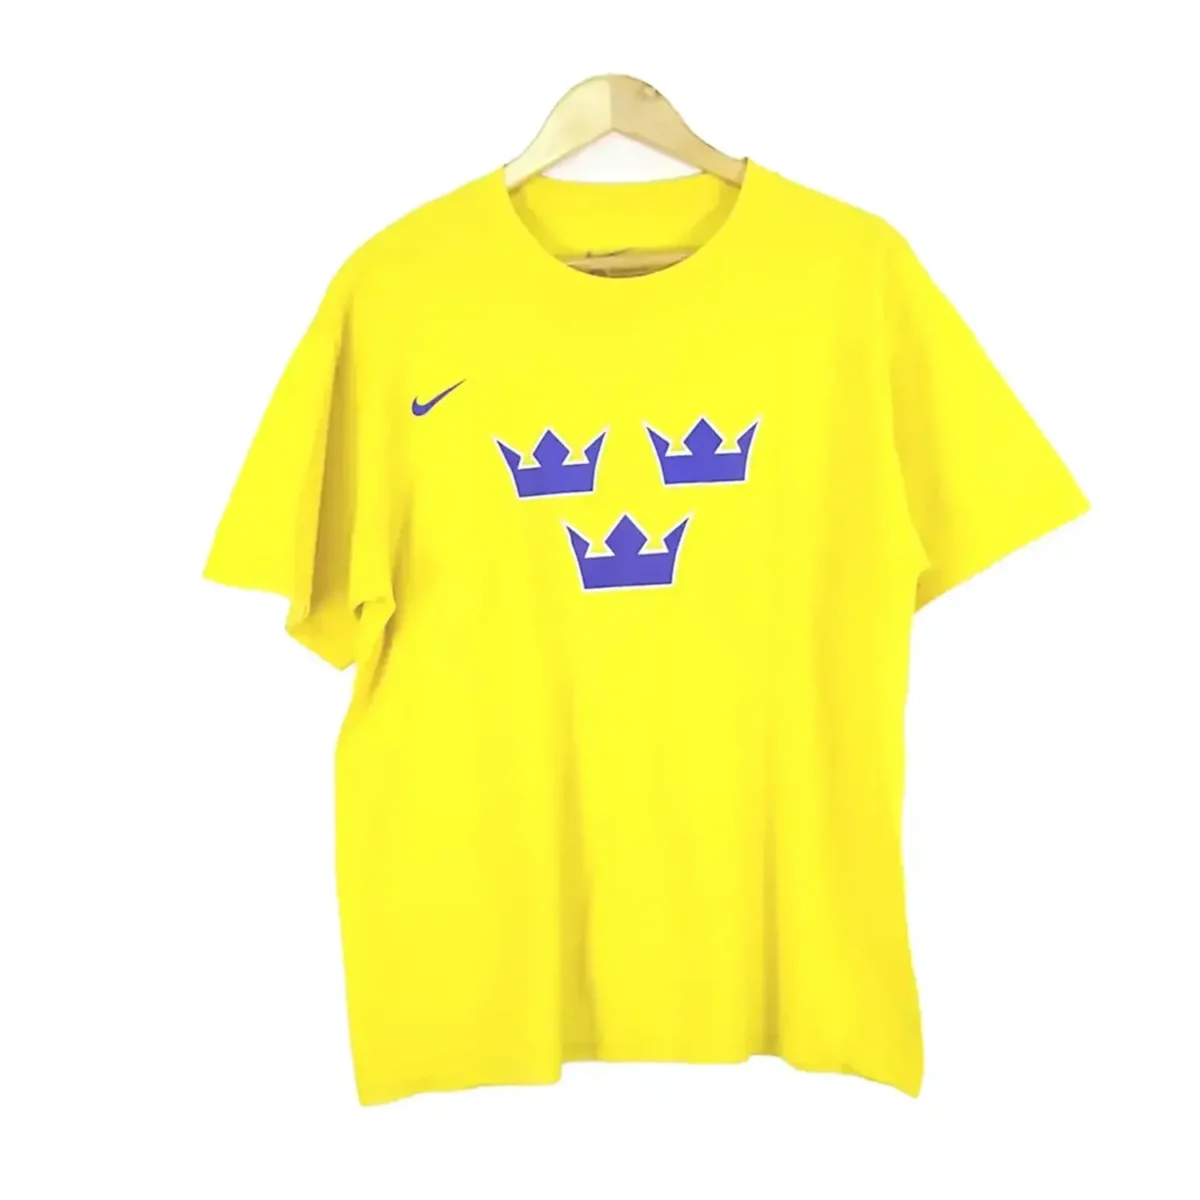 Nike team Sweden t-shirt